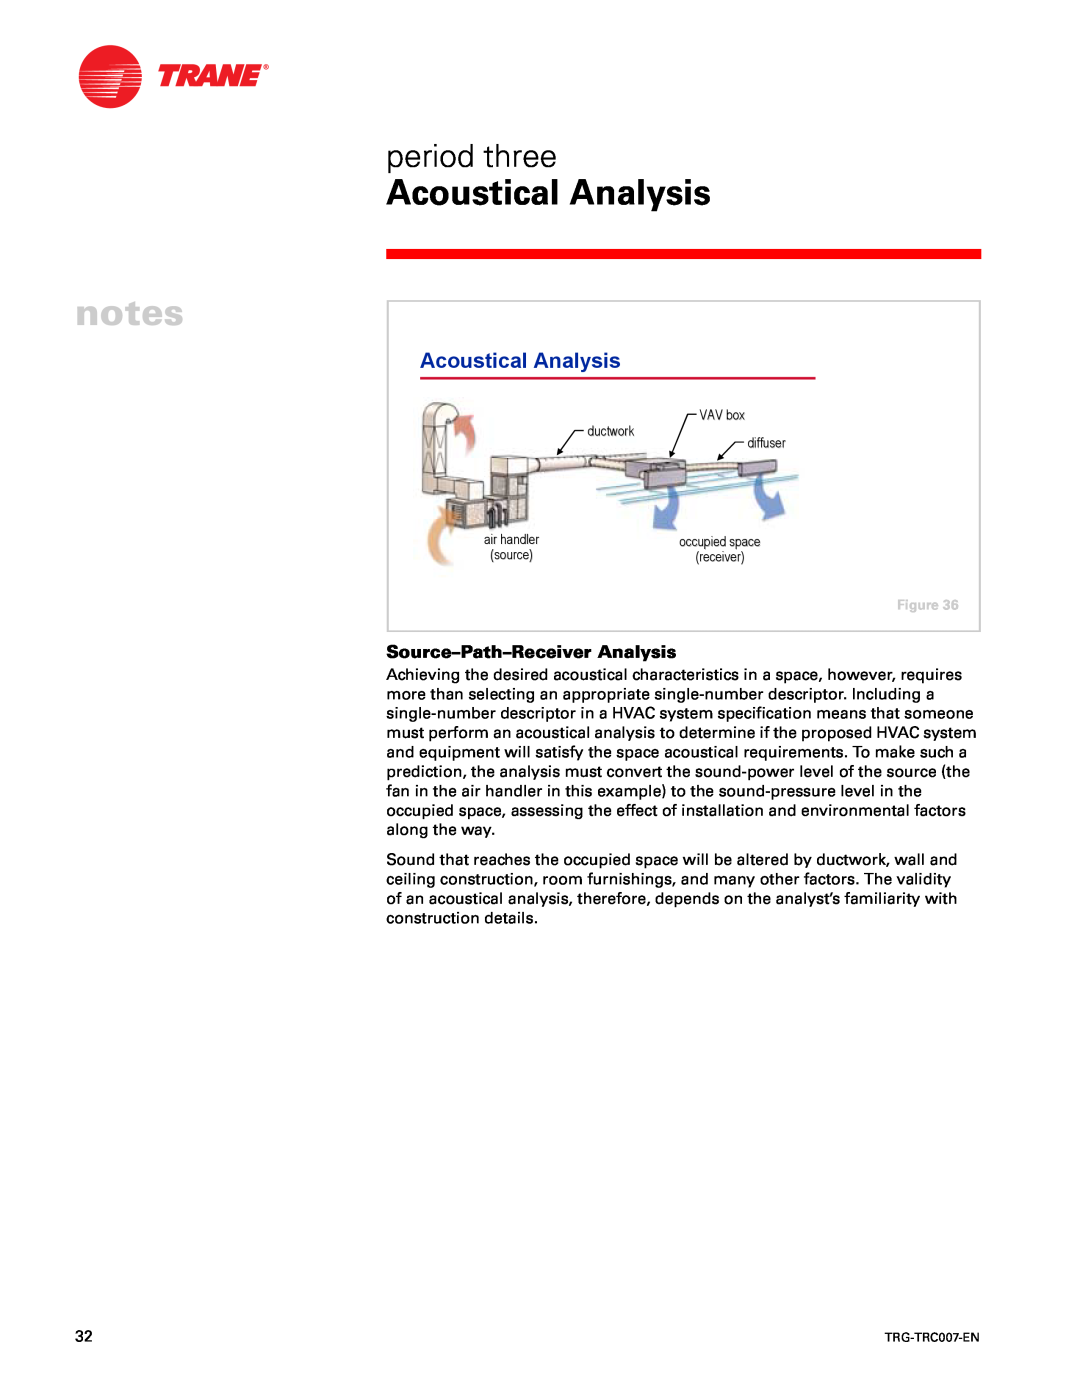 Trane TRG-TRC007-EN manual Acoustical Analysis, period three, Source-Path-ReceiverAnalysis 